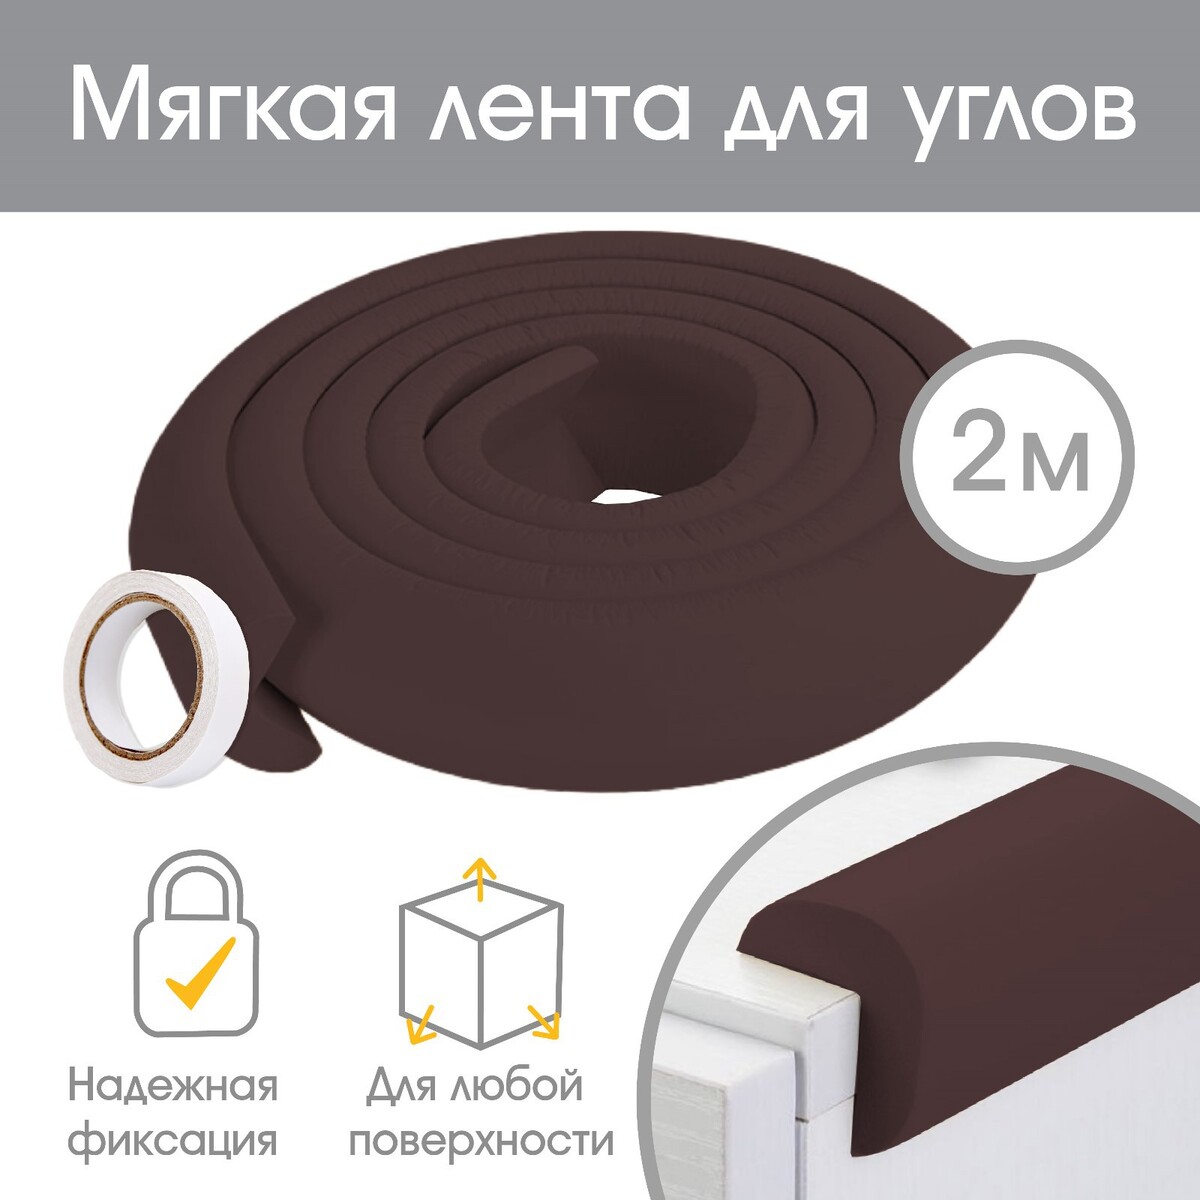 Лента для углов, 2 м., ширина 3,5 см., цвет коричневый лента для углов 2 м ширина 3 5 см